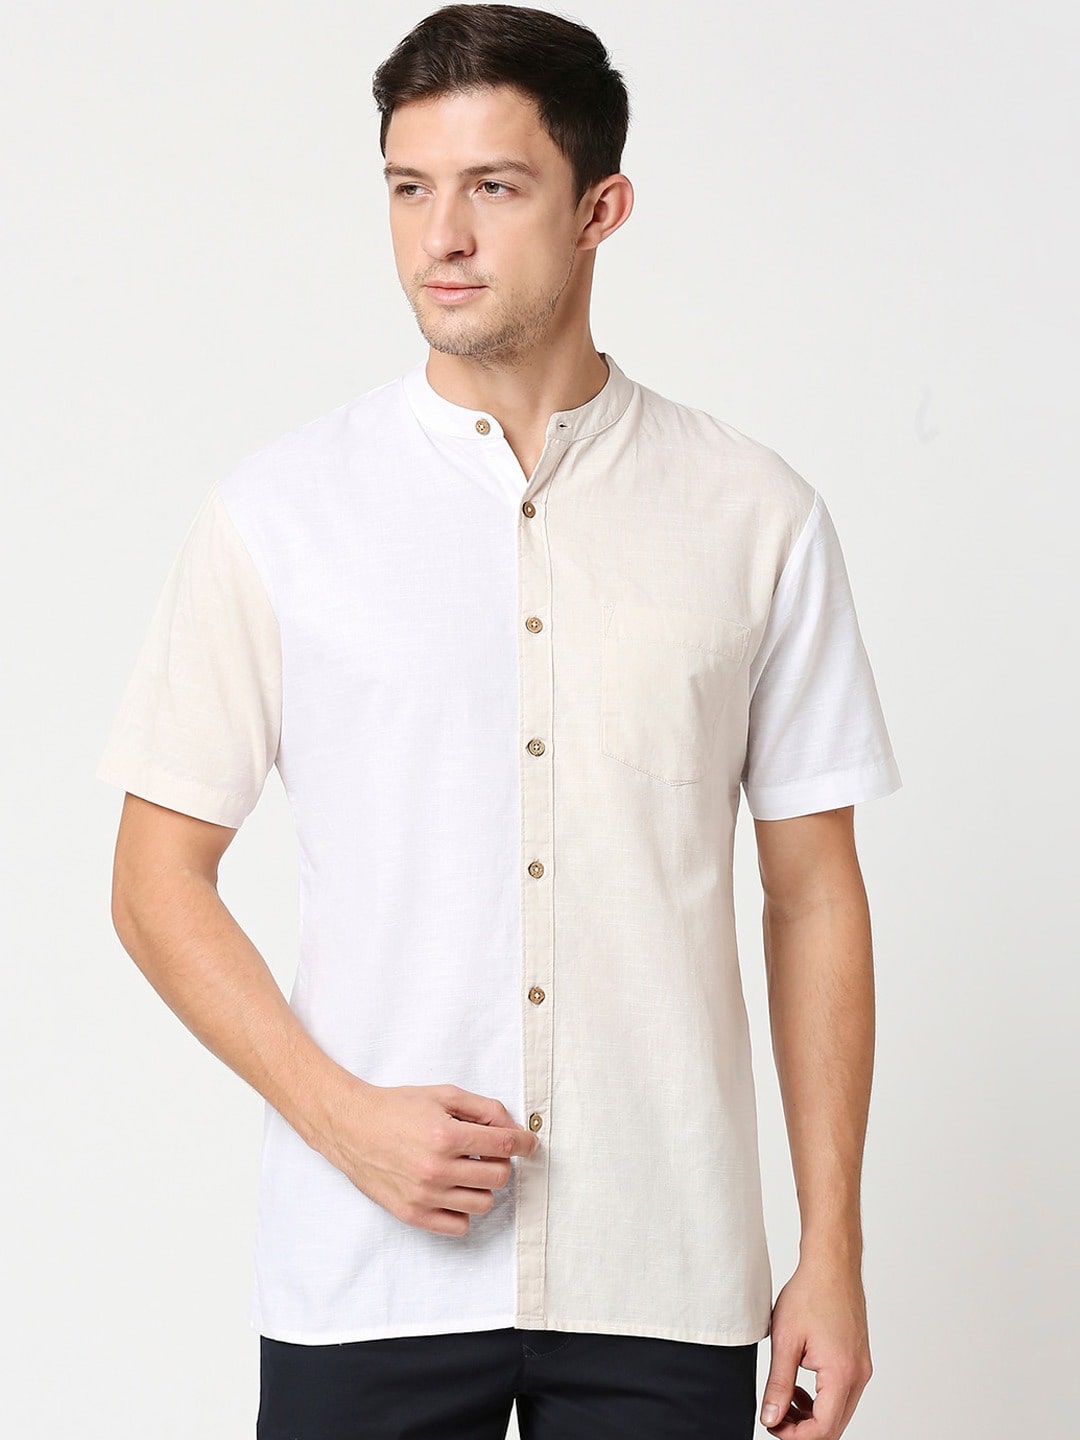 White & Cream Colourblocked Casual Shirt